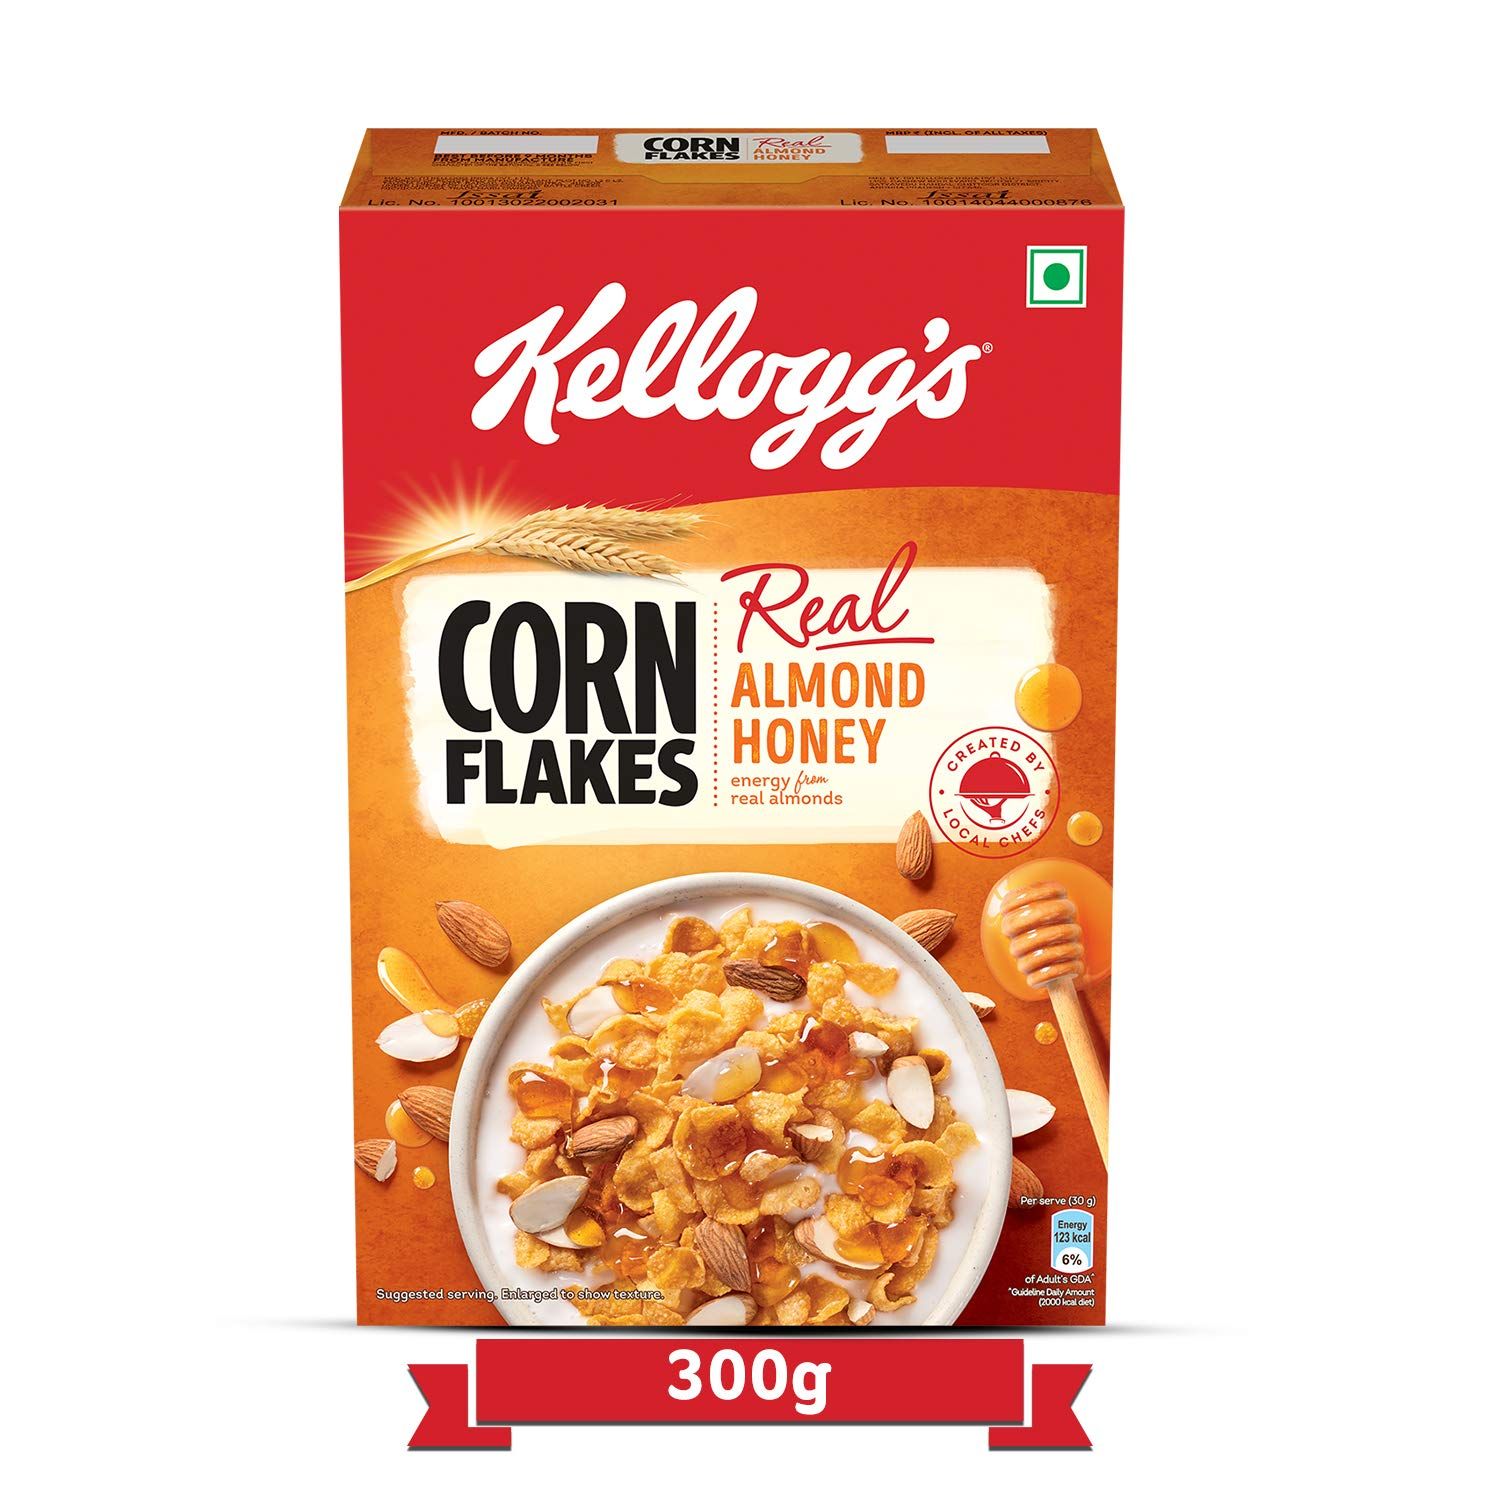 Kellogg's Corn Flakes Real Almond Honey Image